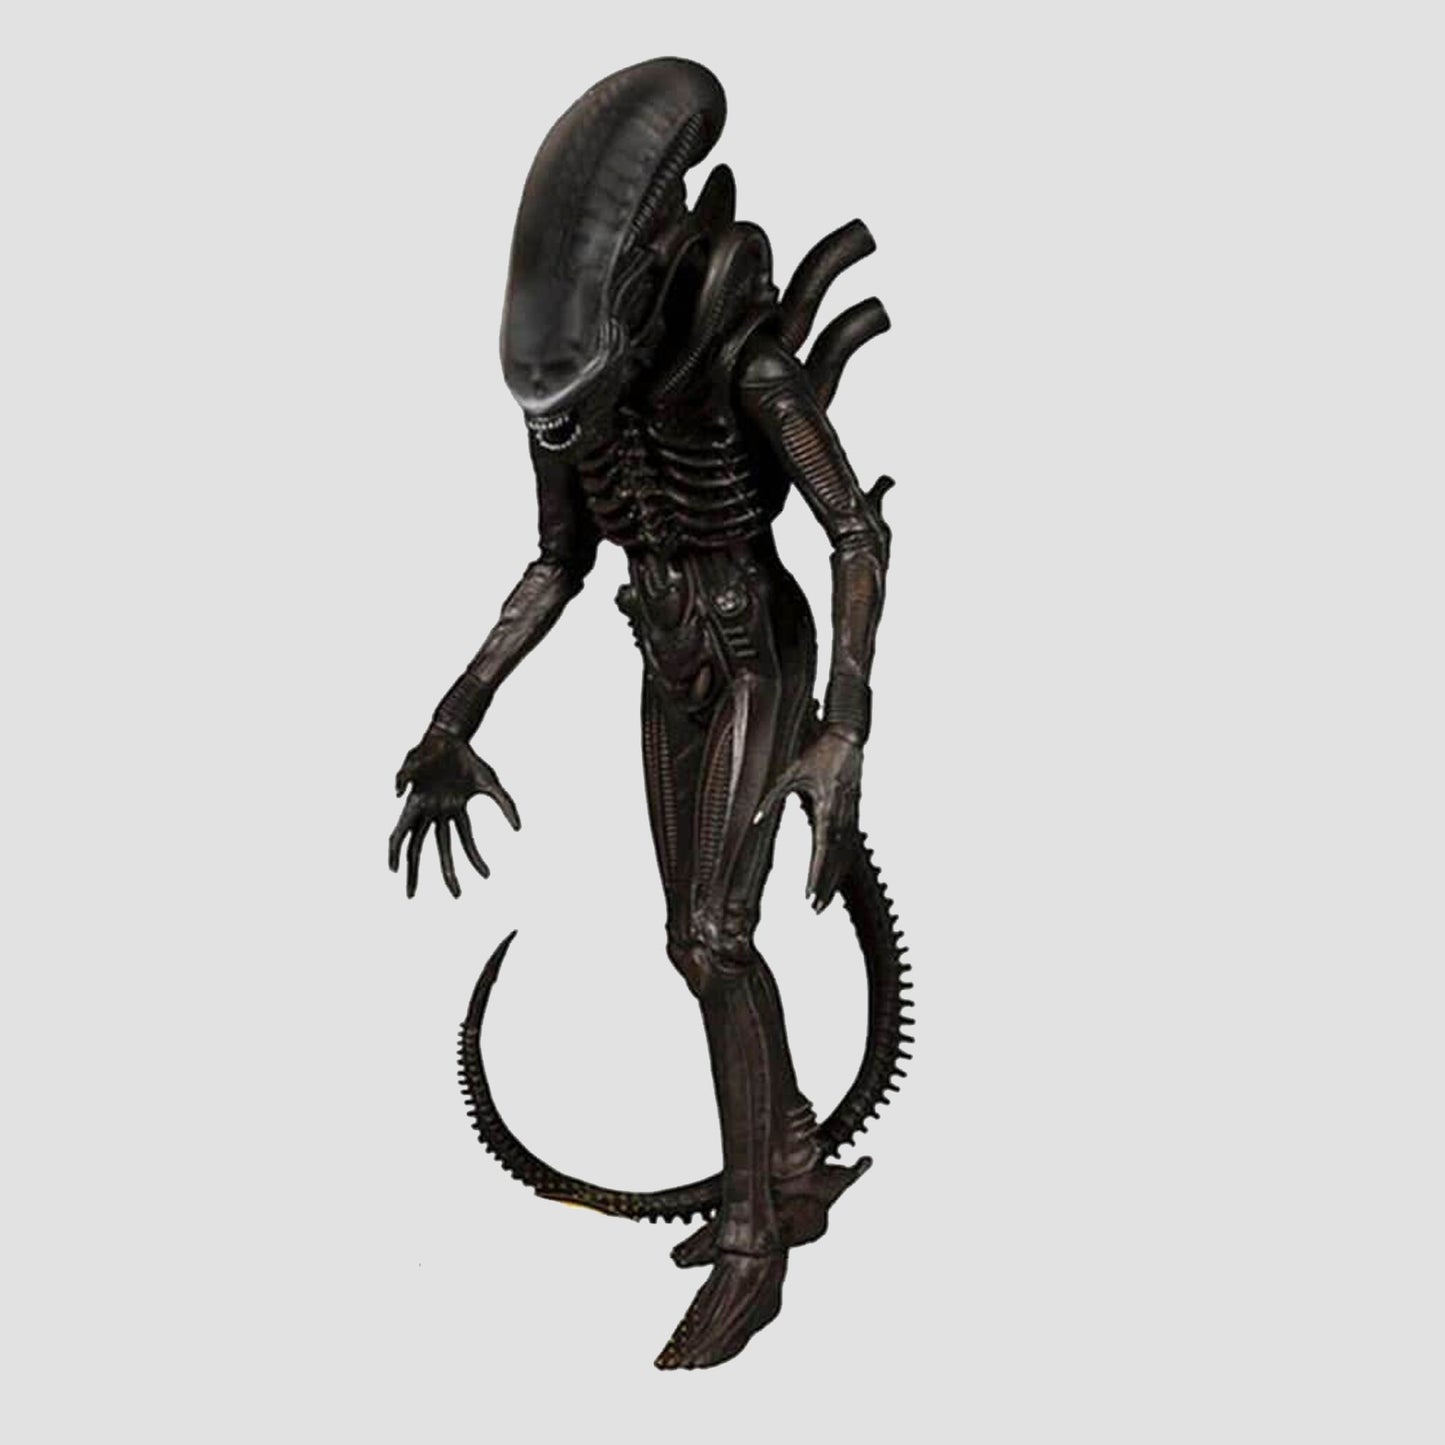 Xenomorph (Alien) One-12 Collective Deluxe Edition Action Figure